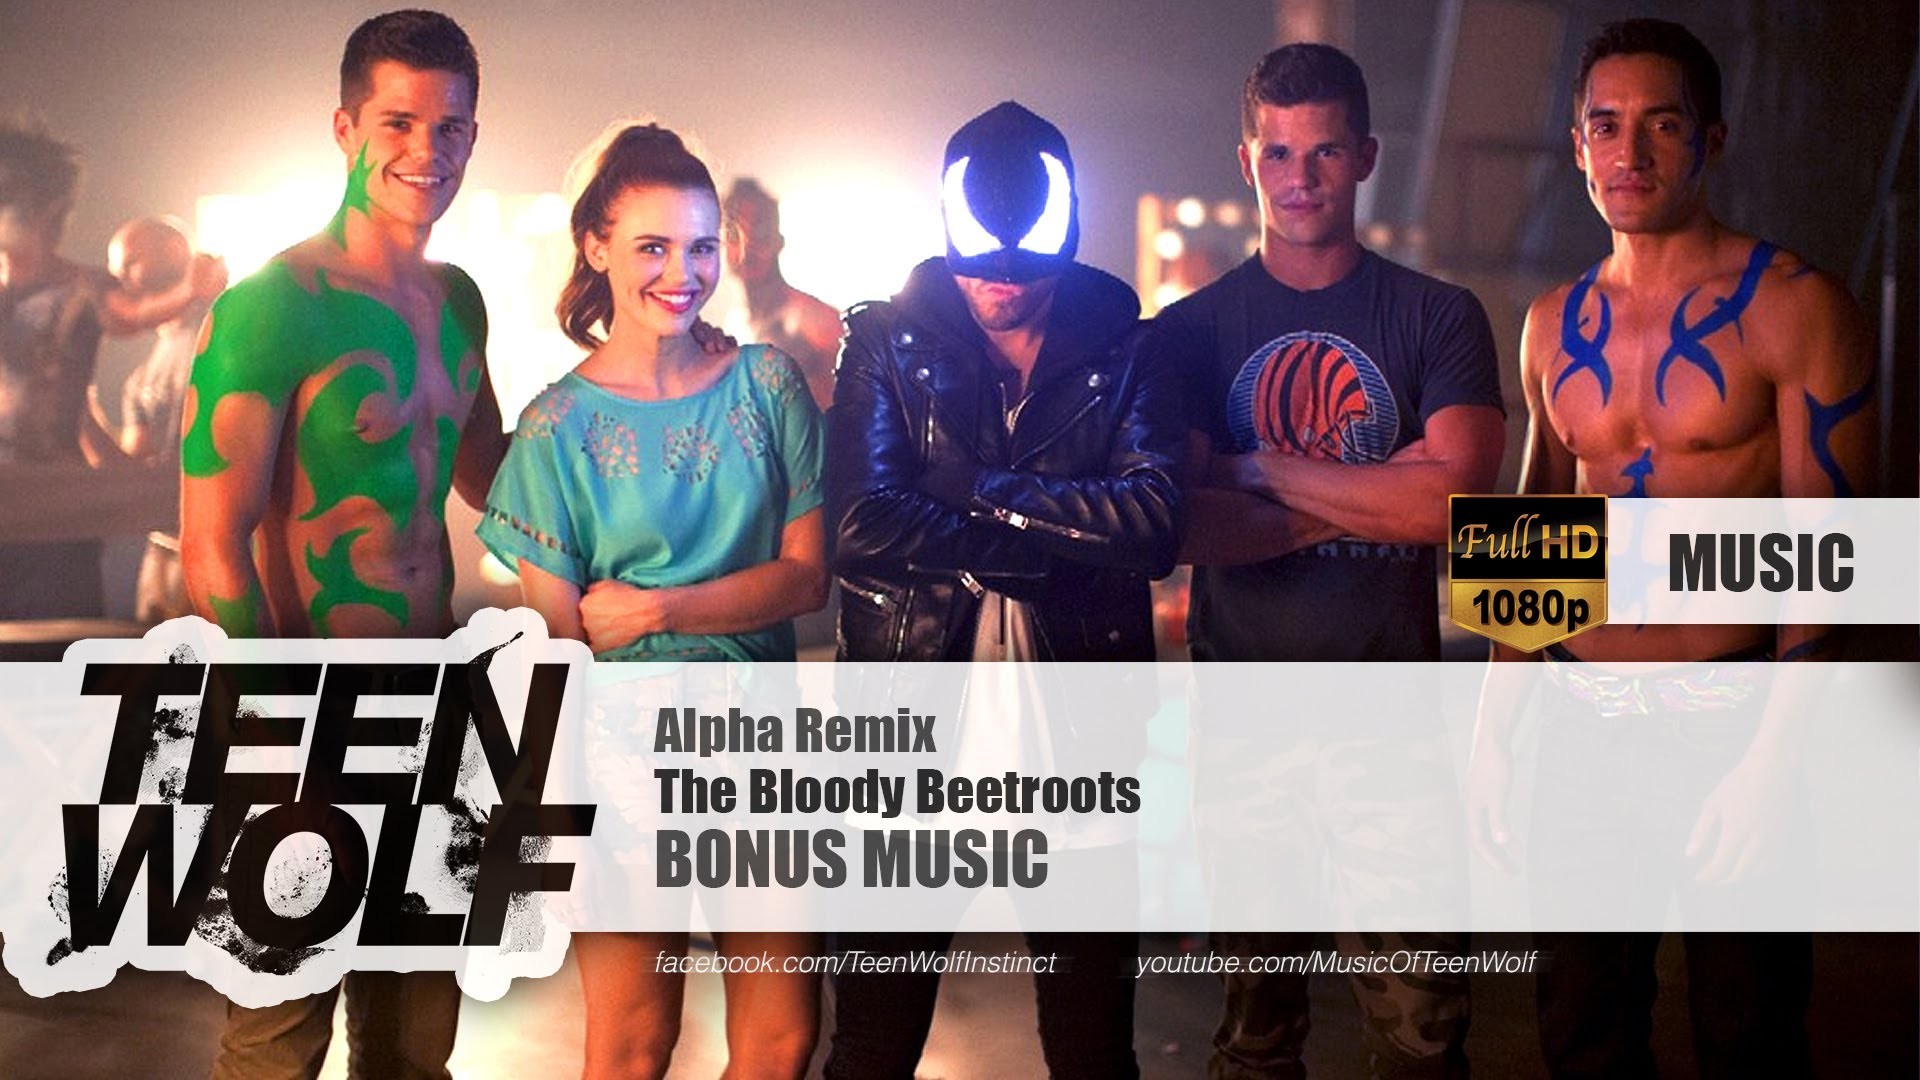 1920x1080 The Bloody Beetroots - Alpha Remix | Teen Wolf Bonus Music [HD] - YouTube